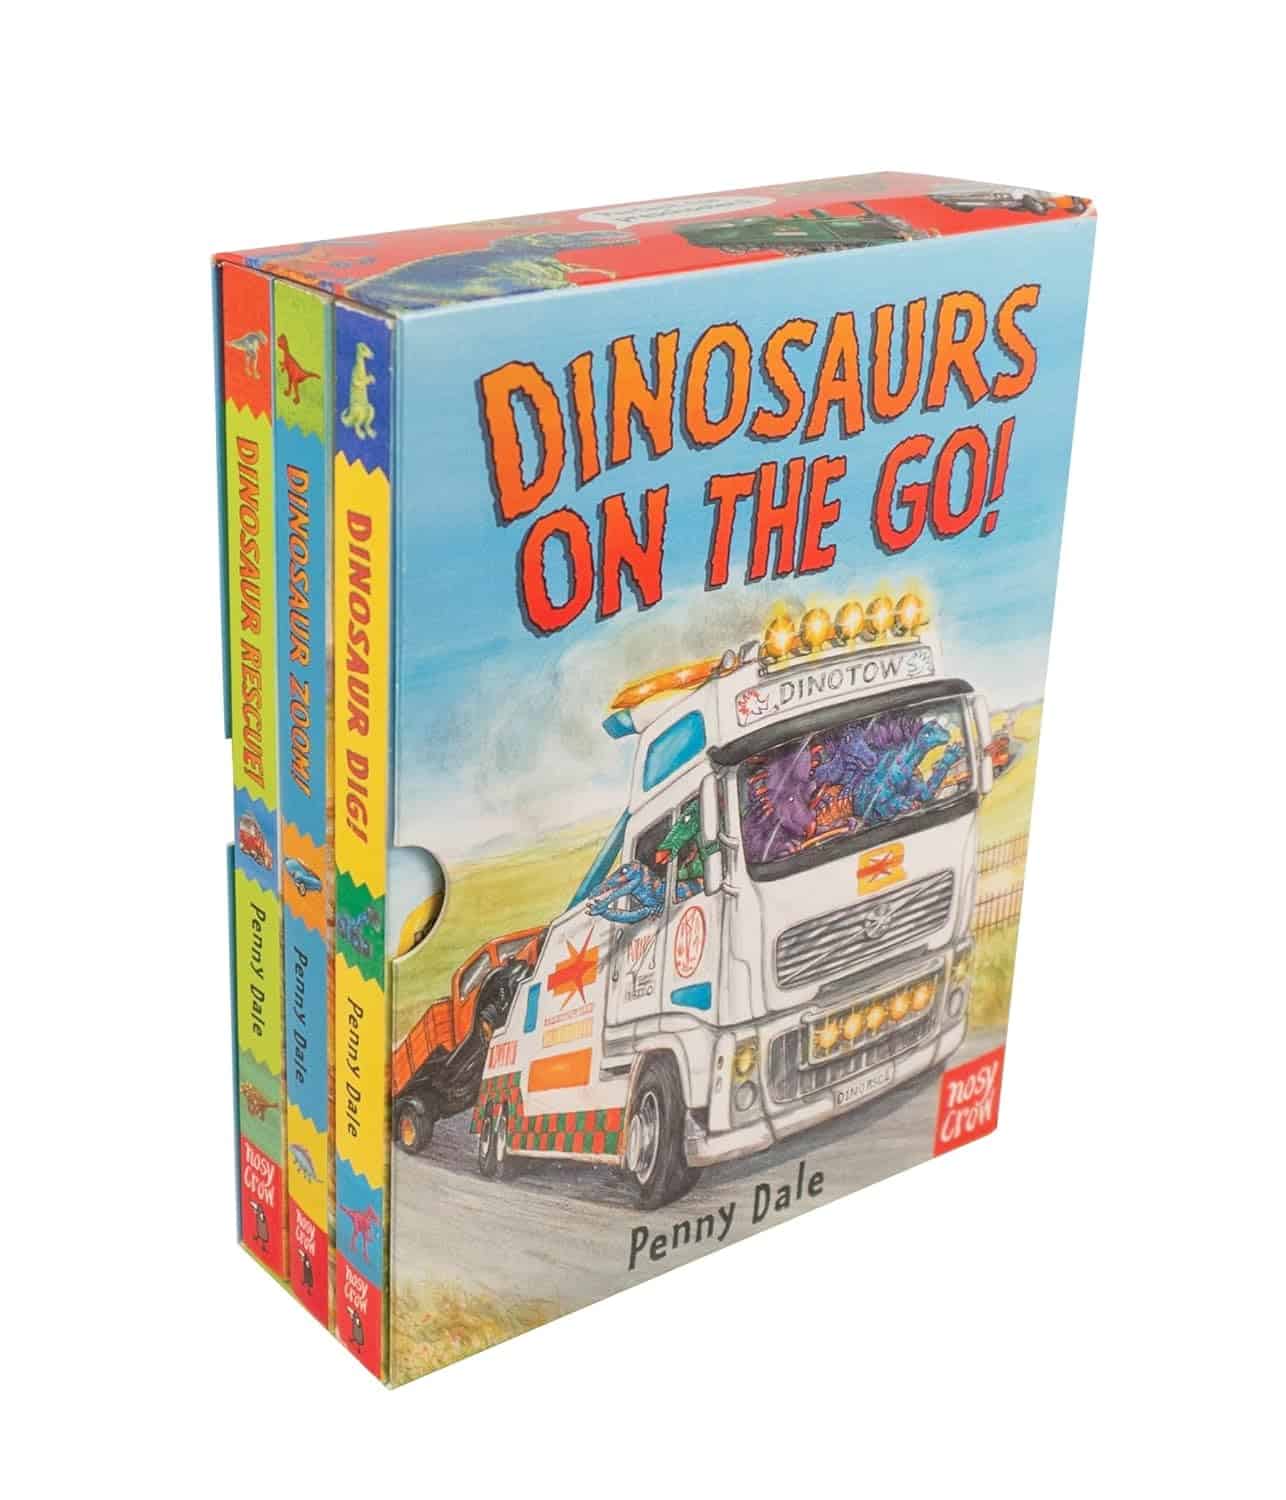 Dinosaur on the Go series by Penny Dale (Pre-K-1)